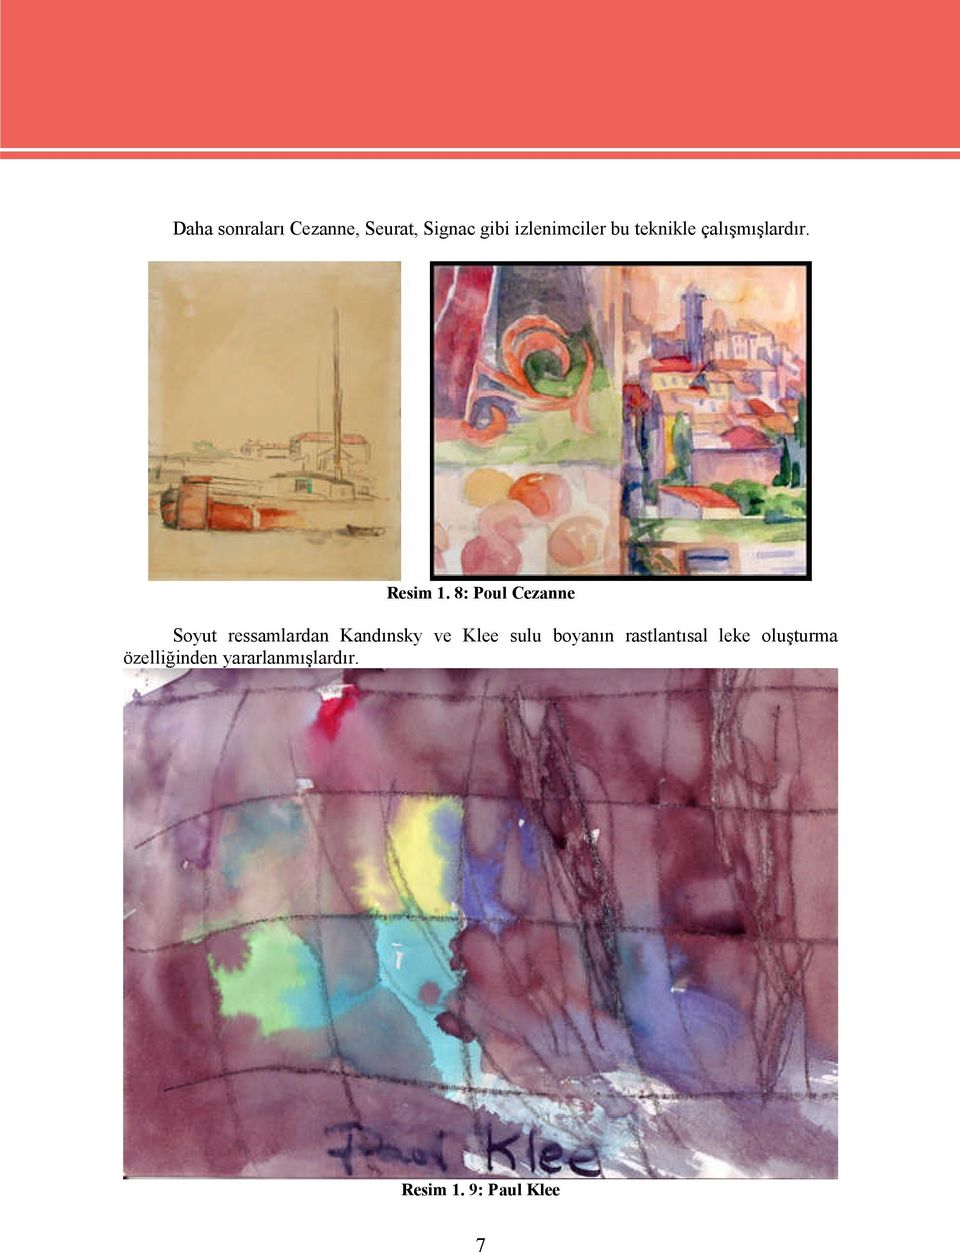 8: Poul Cezanne Soyut ressamlardan Kandınsky ve Klee sulu